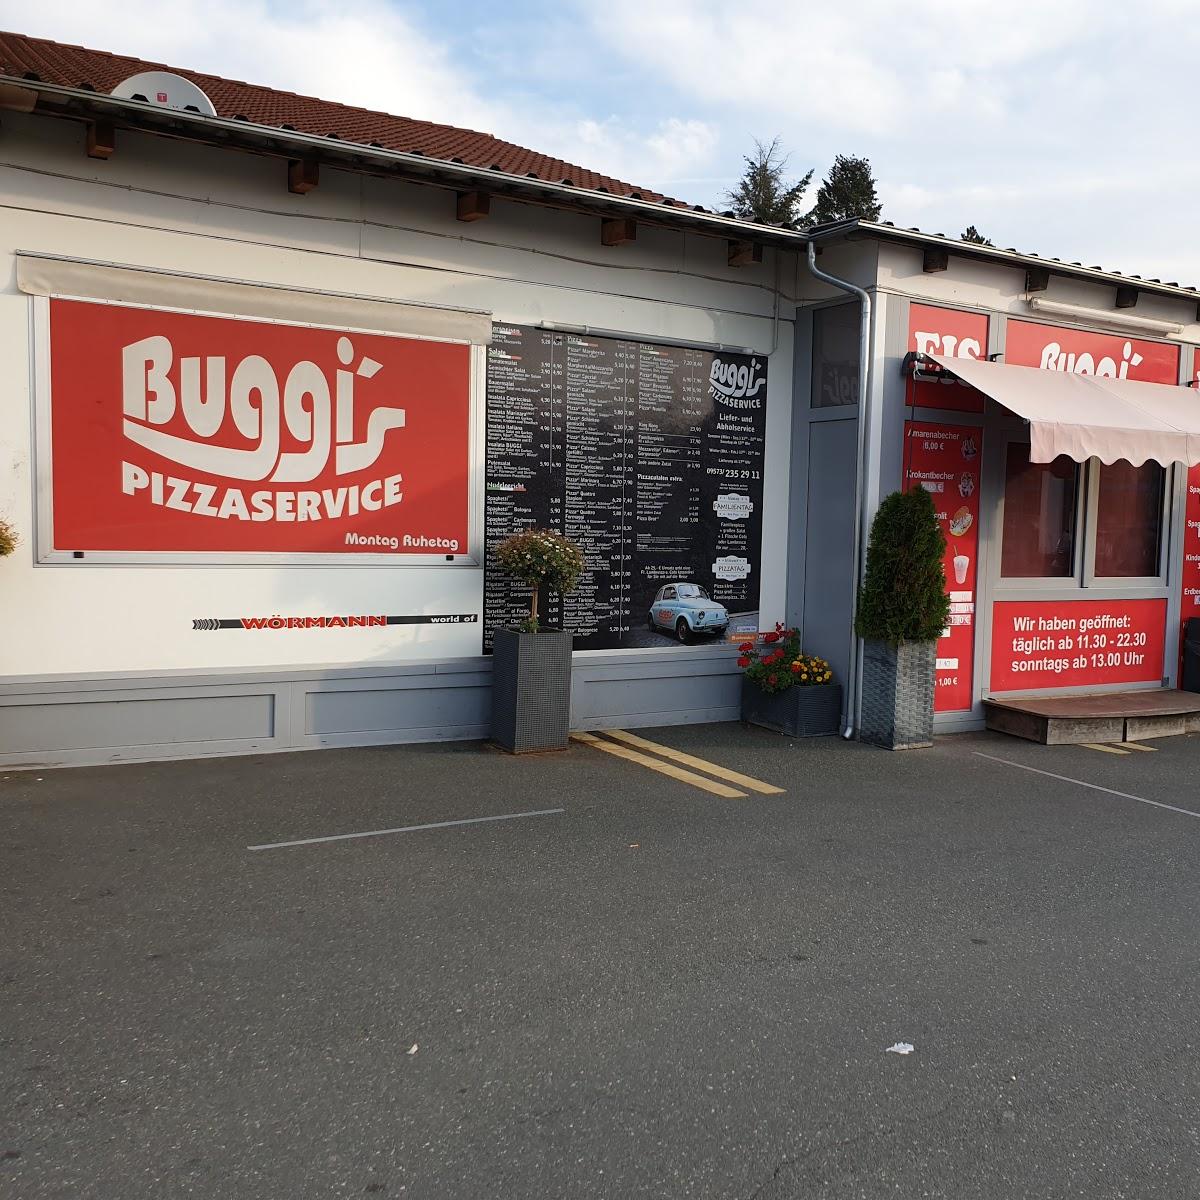 Restaurant "Buggi